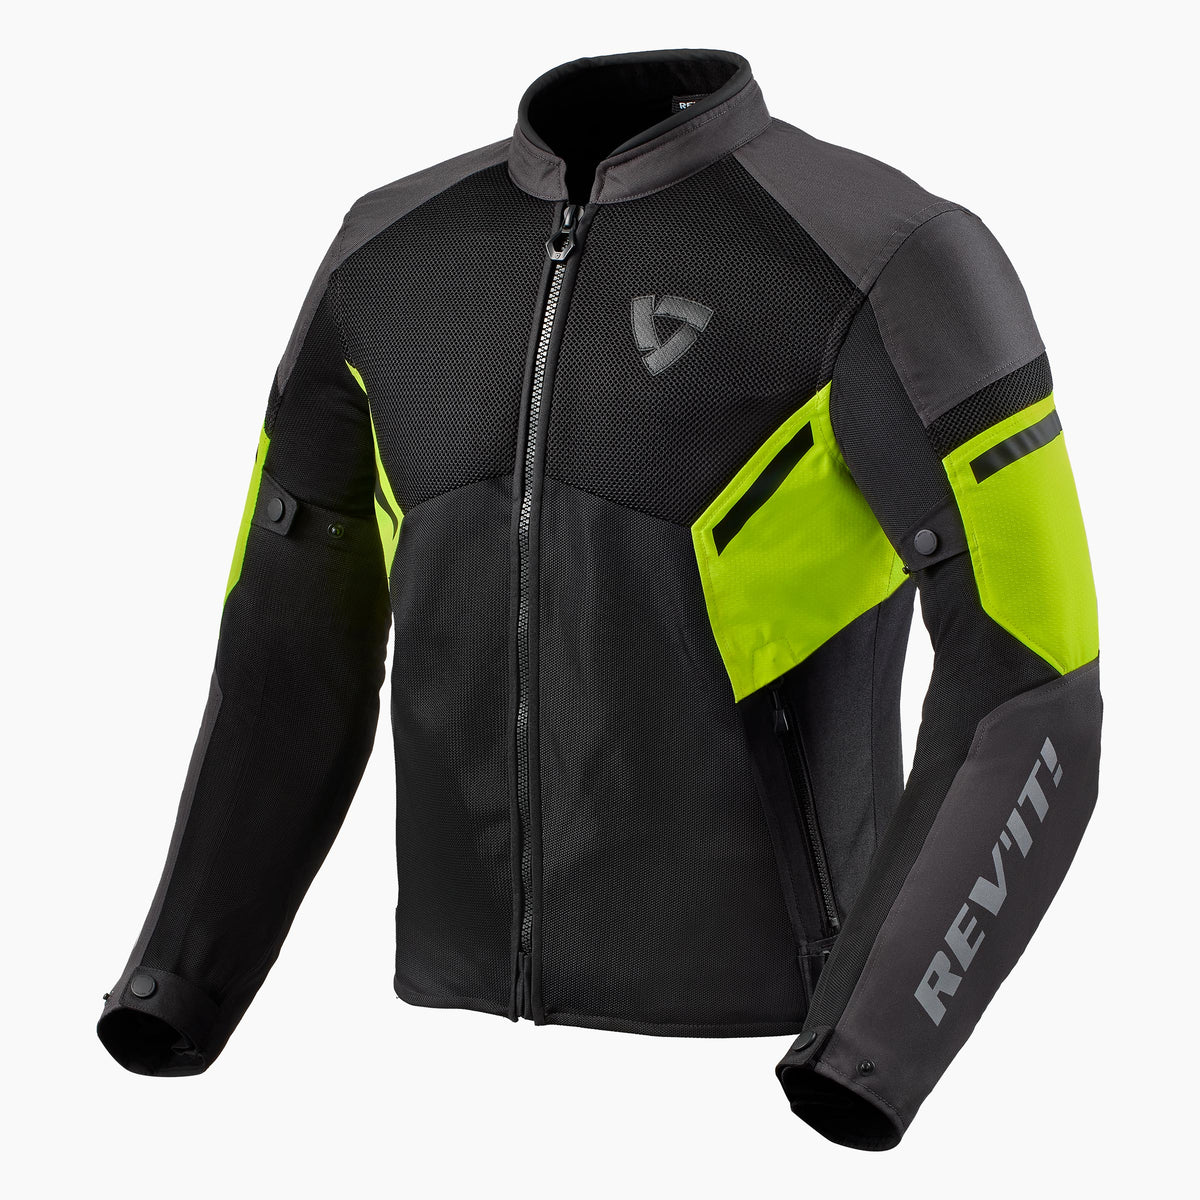 RevIt GT-R Air 3 Jacket Black/Neon Yellow